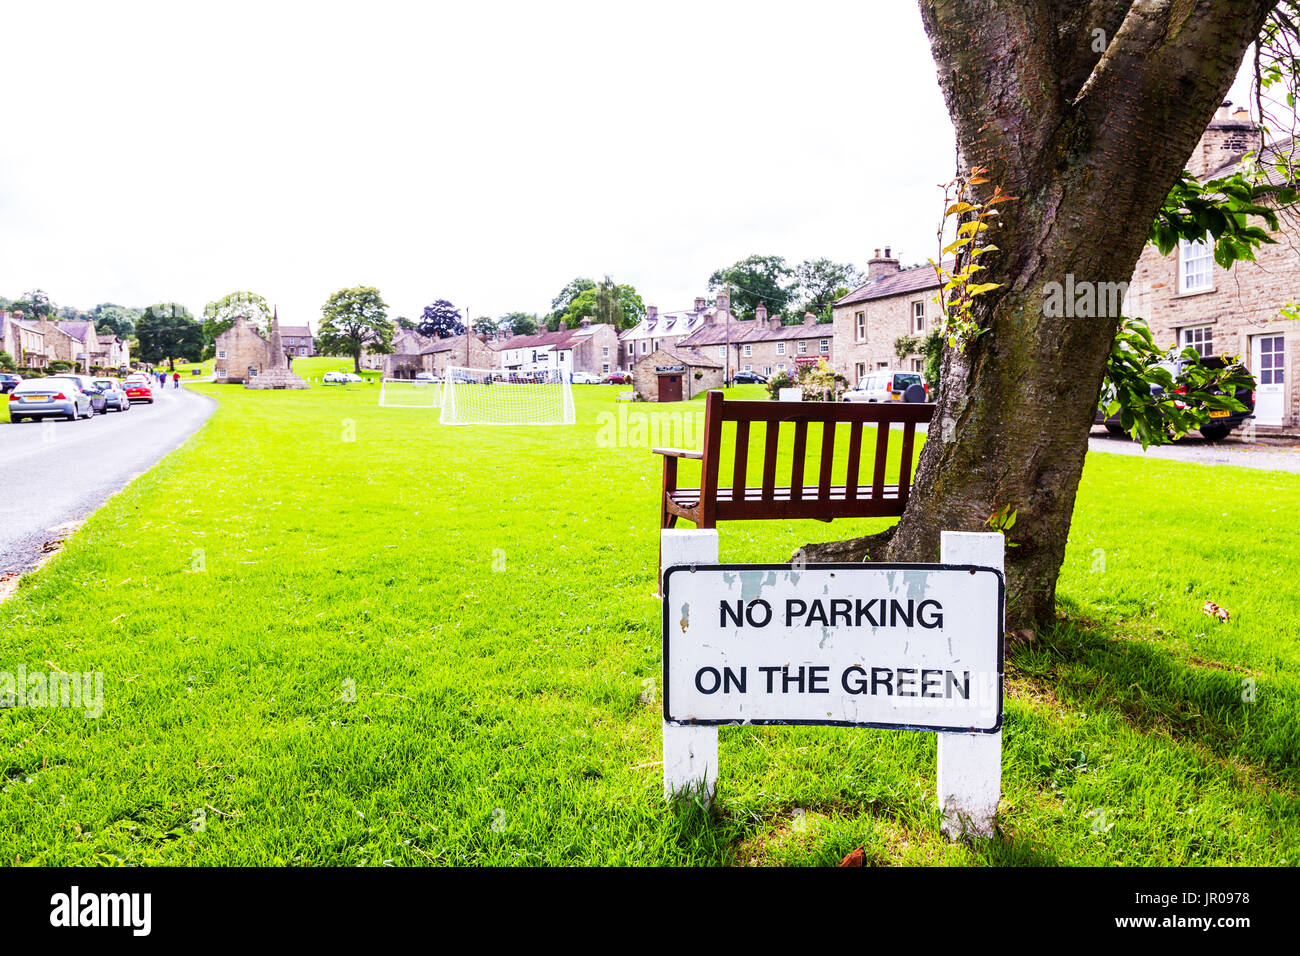 No parking on the green sign, no parking sign, West Burton, Yorkshire, UK, England, West Burton village green, West Burton village, village green, Stock Photo